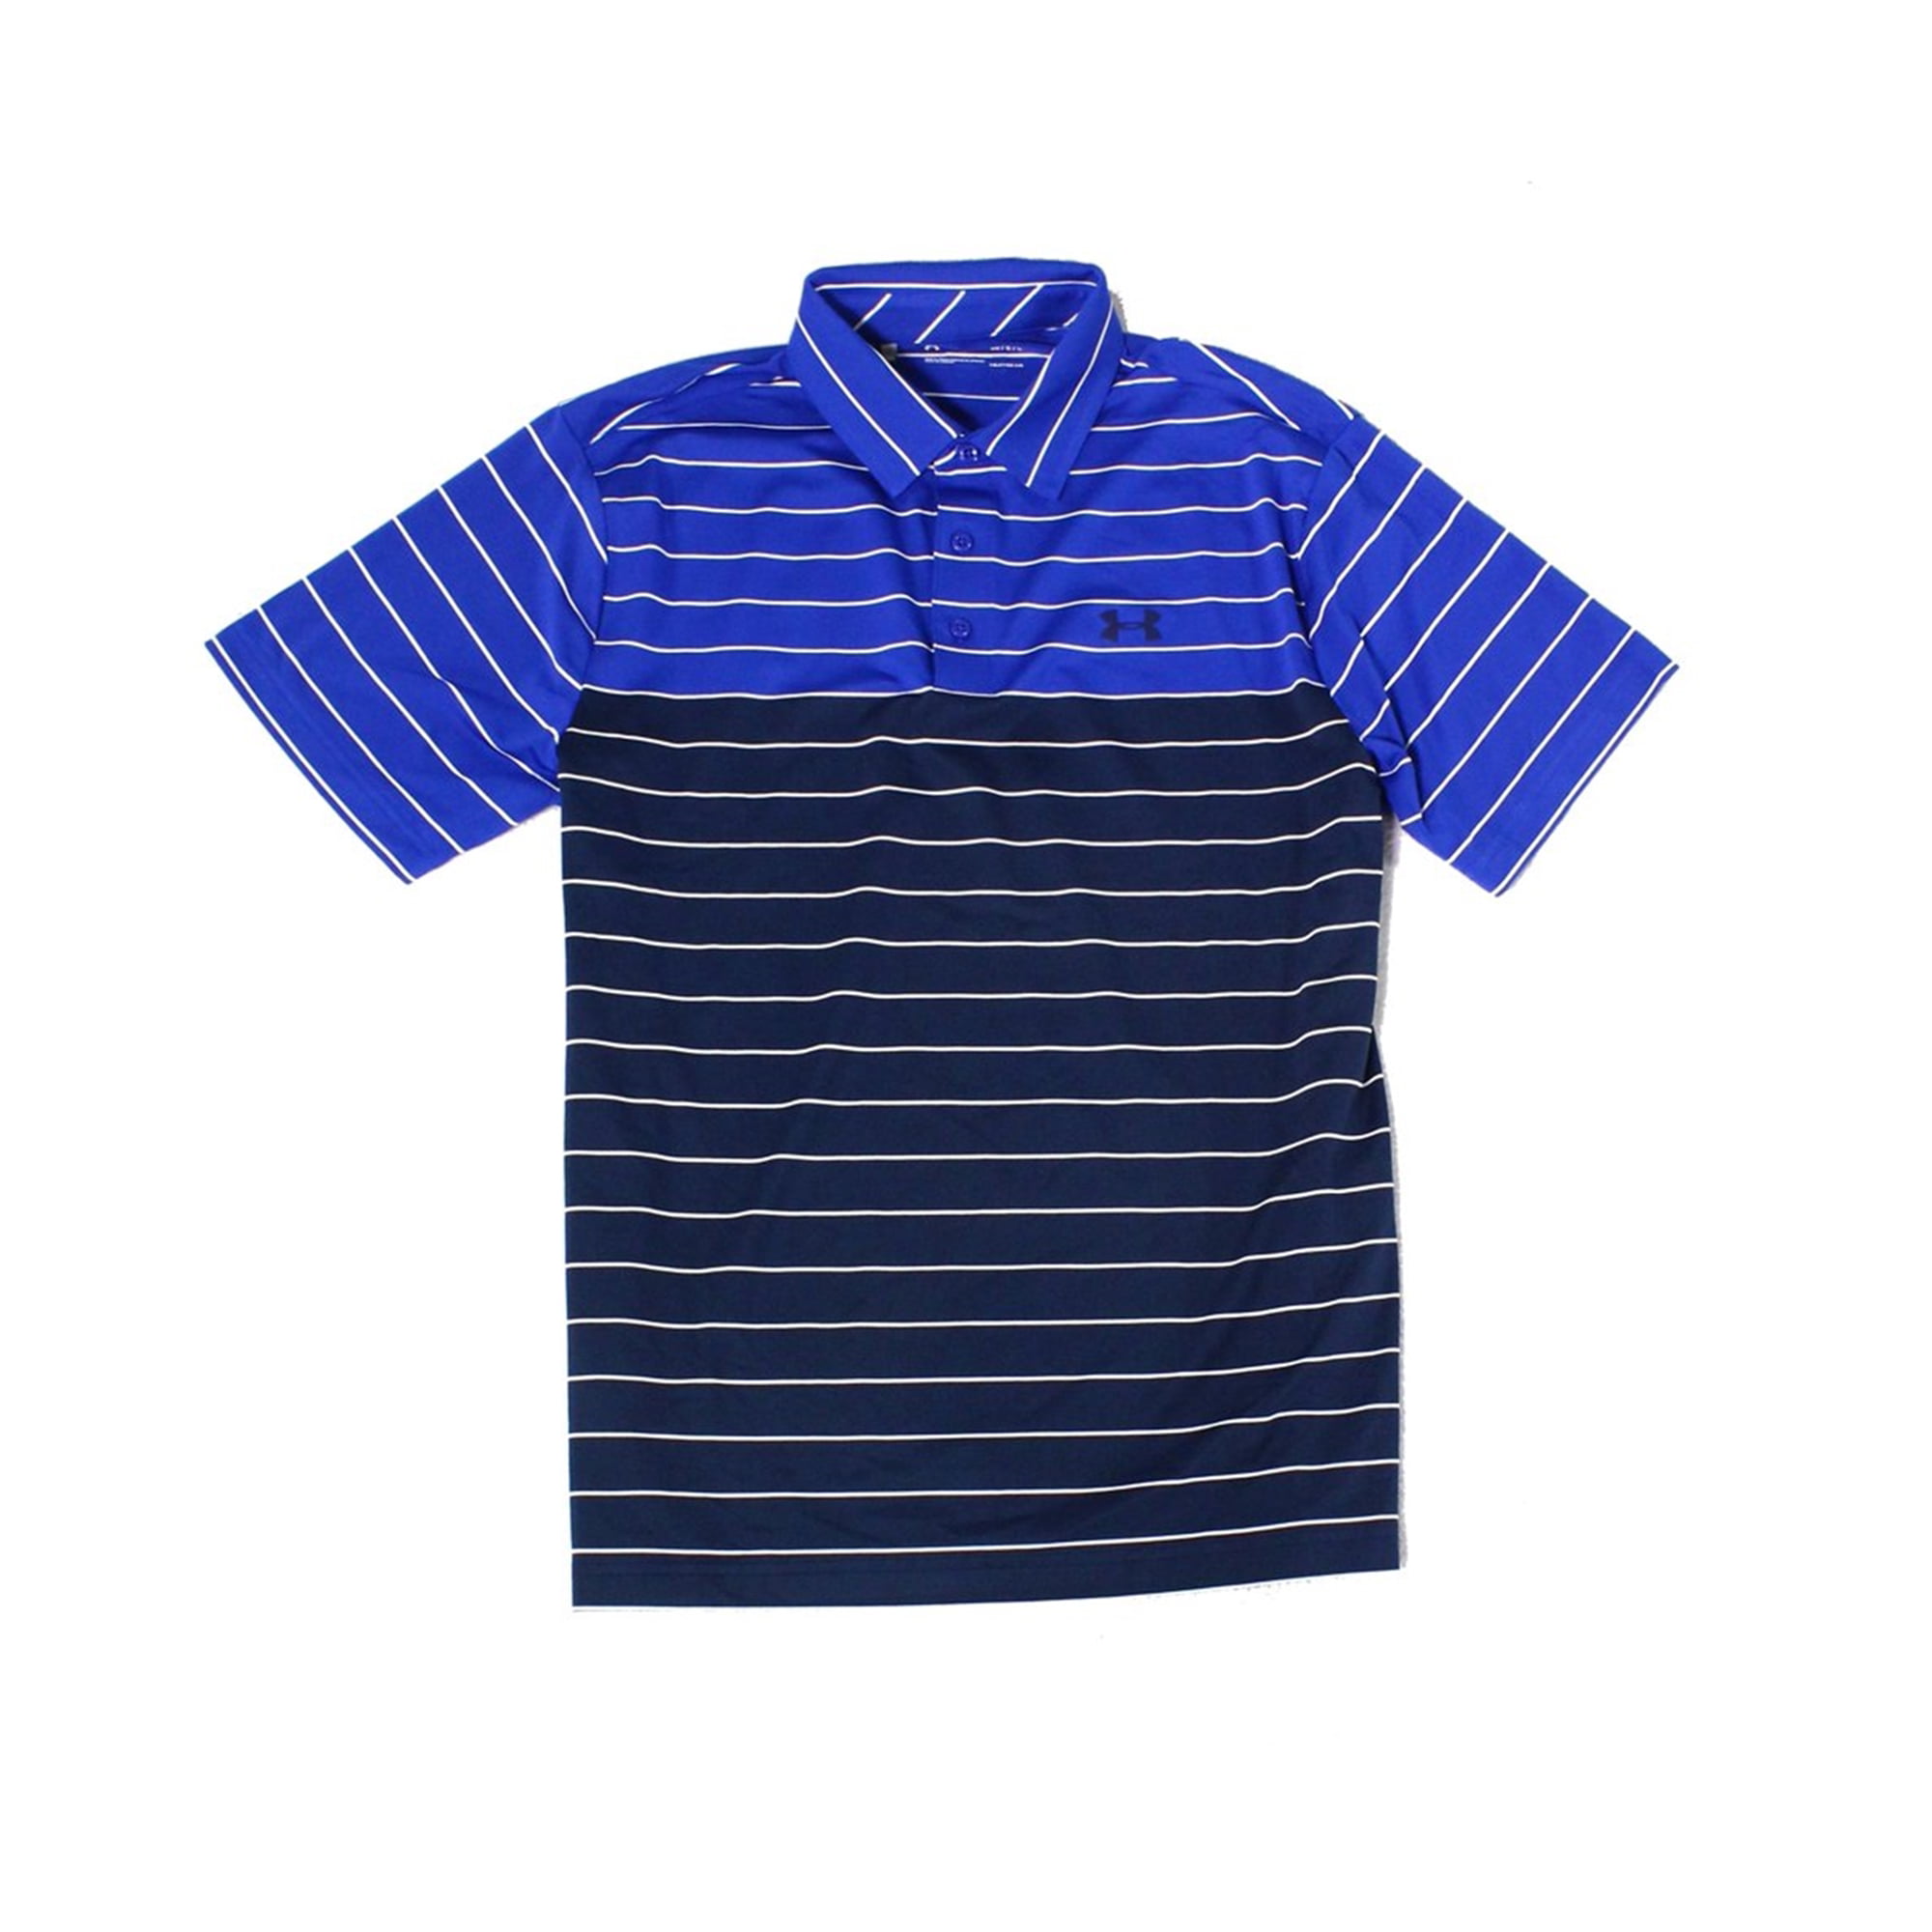 Under Armour Mens Pinstripe Rugby Polo Shirt, Blue, Small - Walmart.com